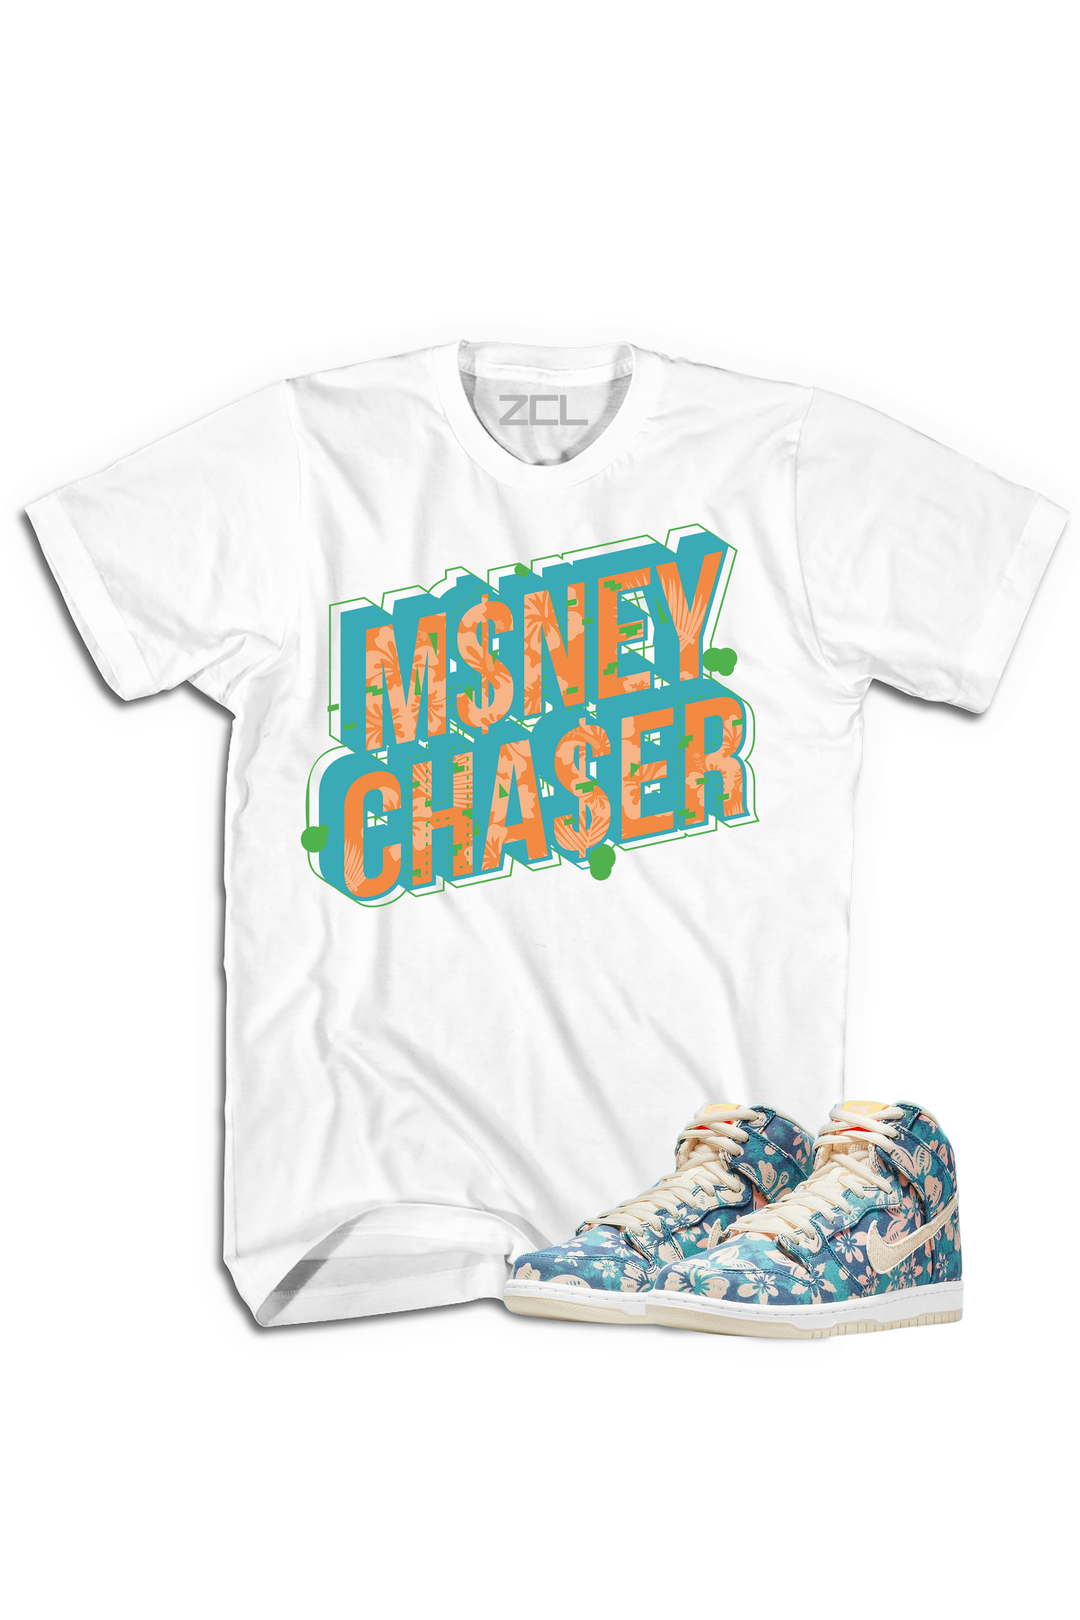 Nike SB Dunk High "Money Chaser" Tee Hawaii - Zamage